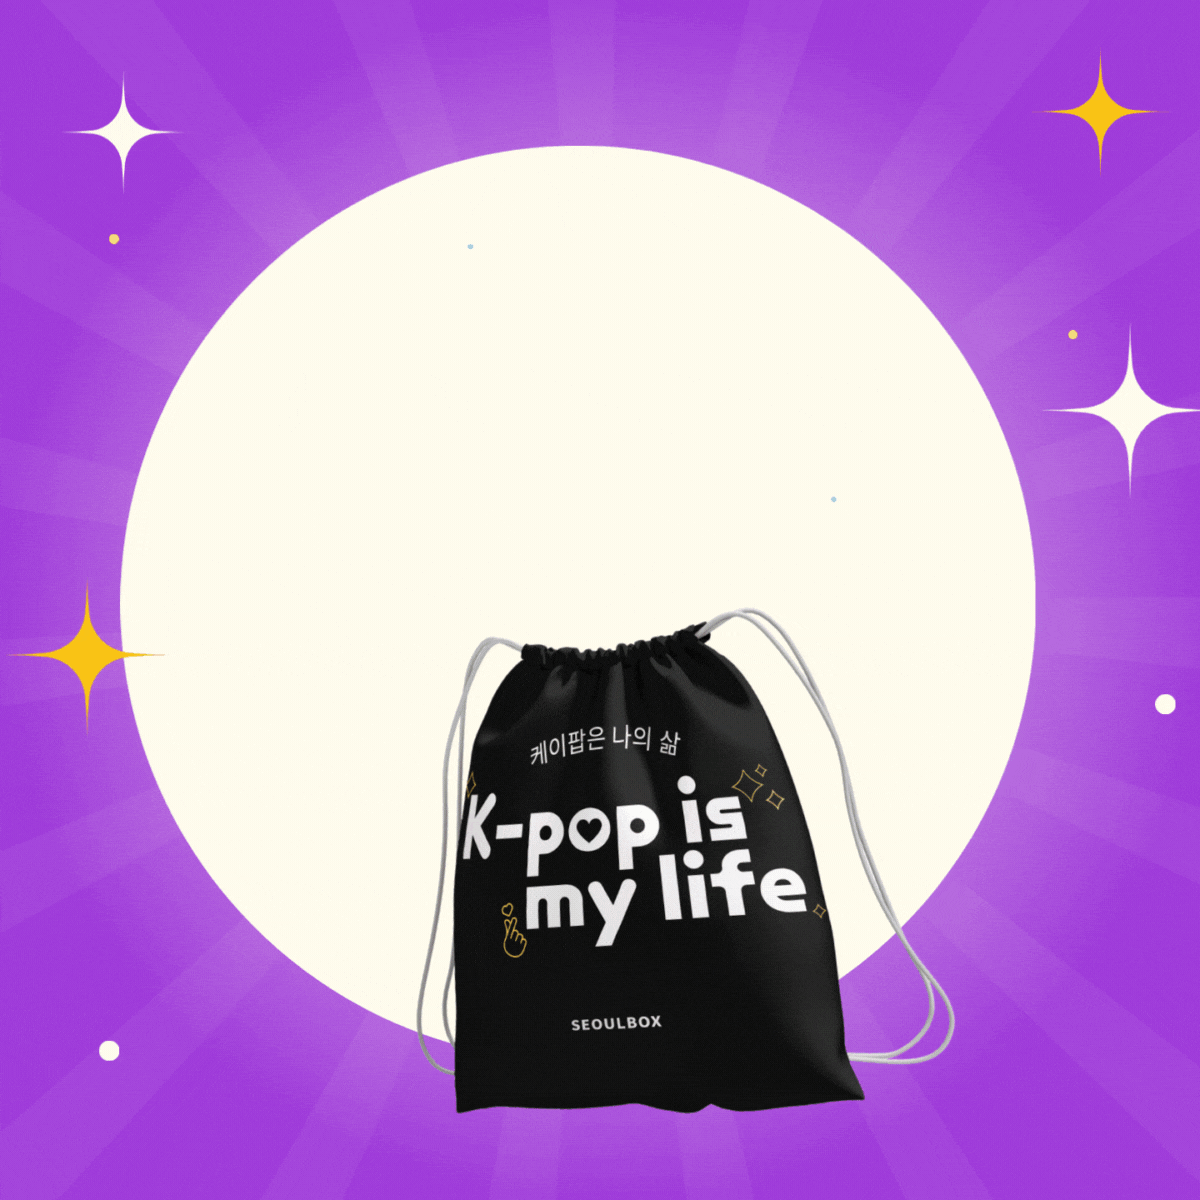 MYSTERY K-POP BAG